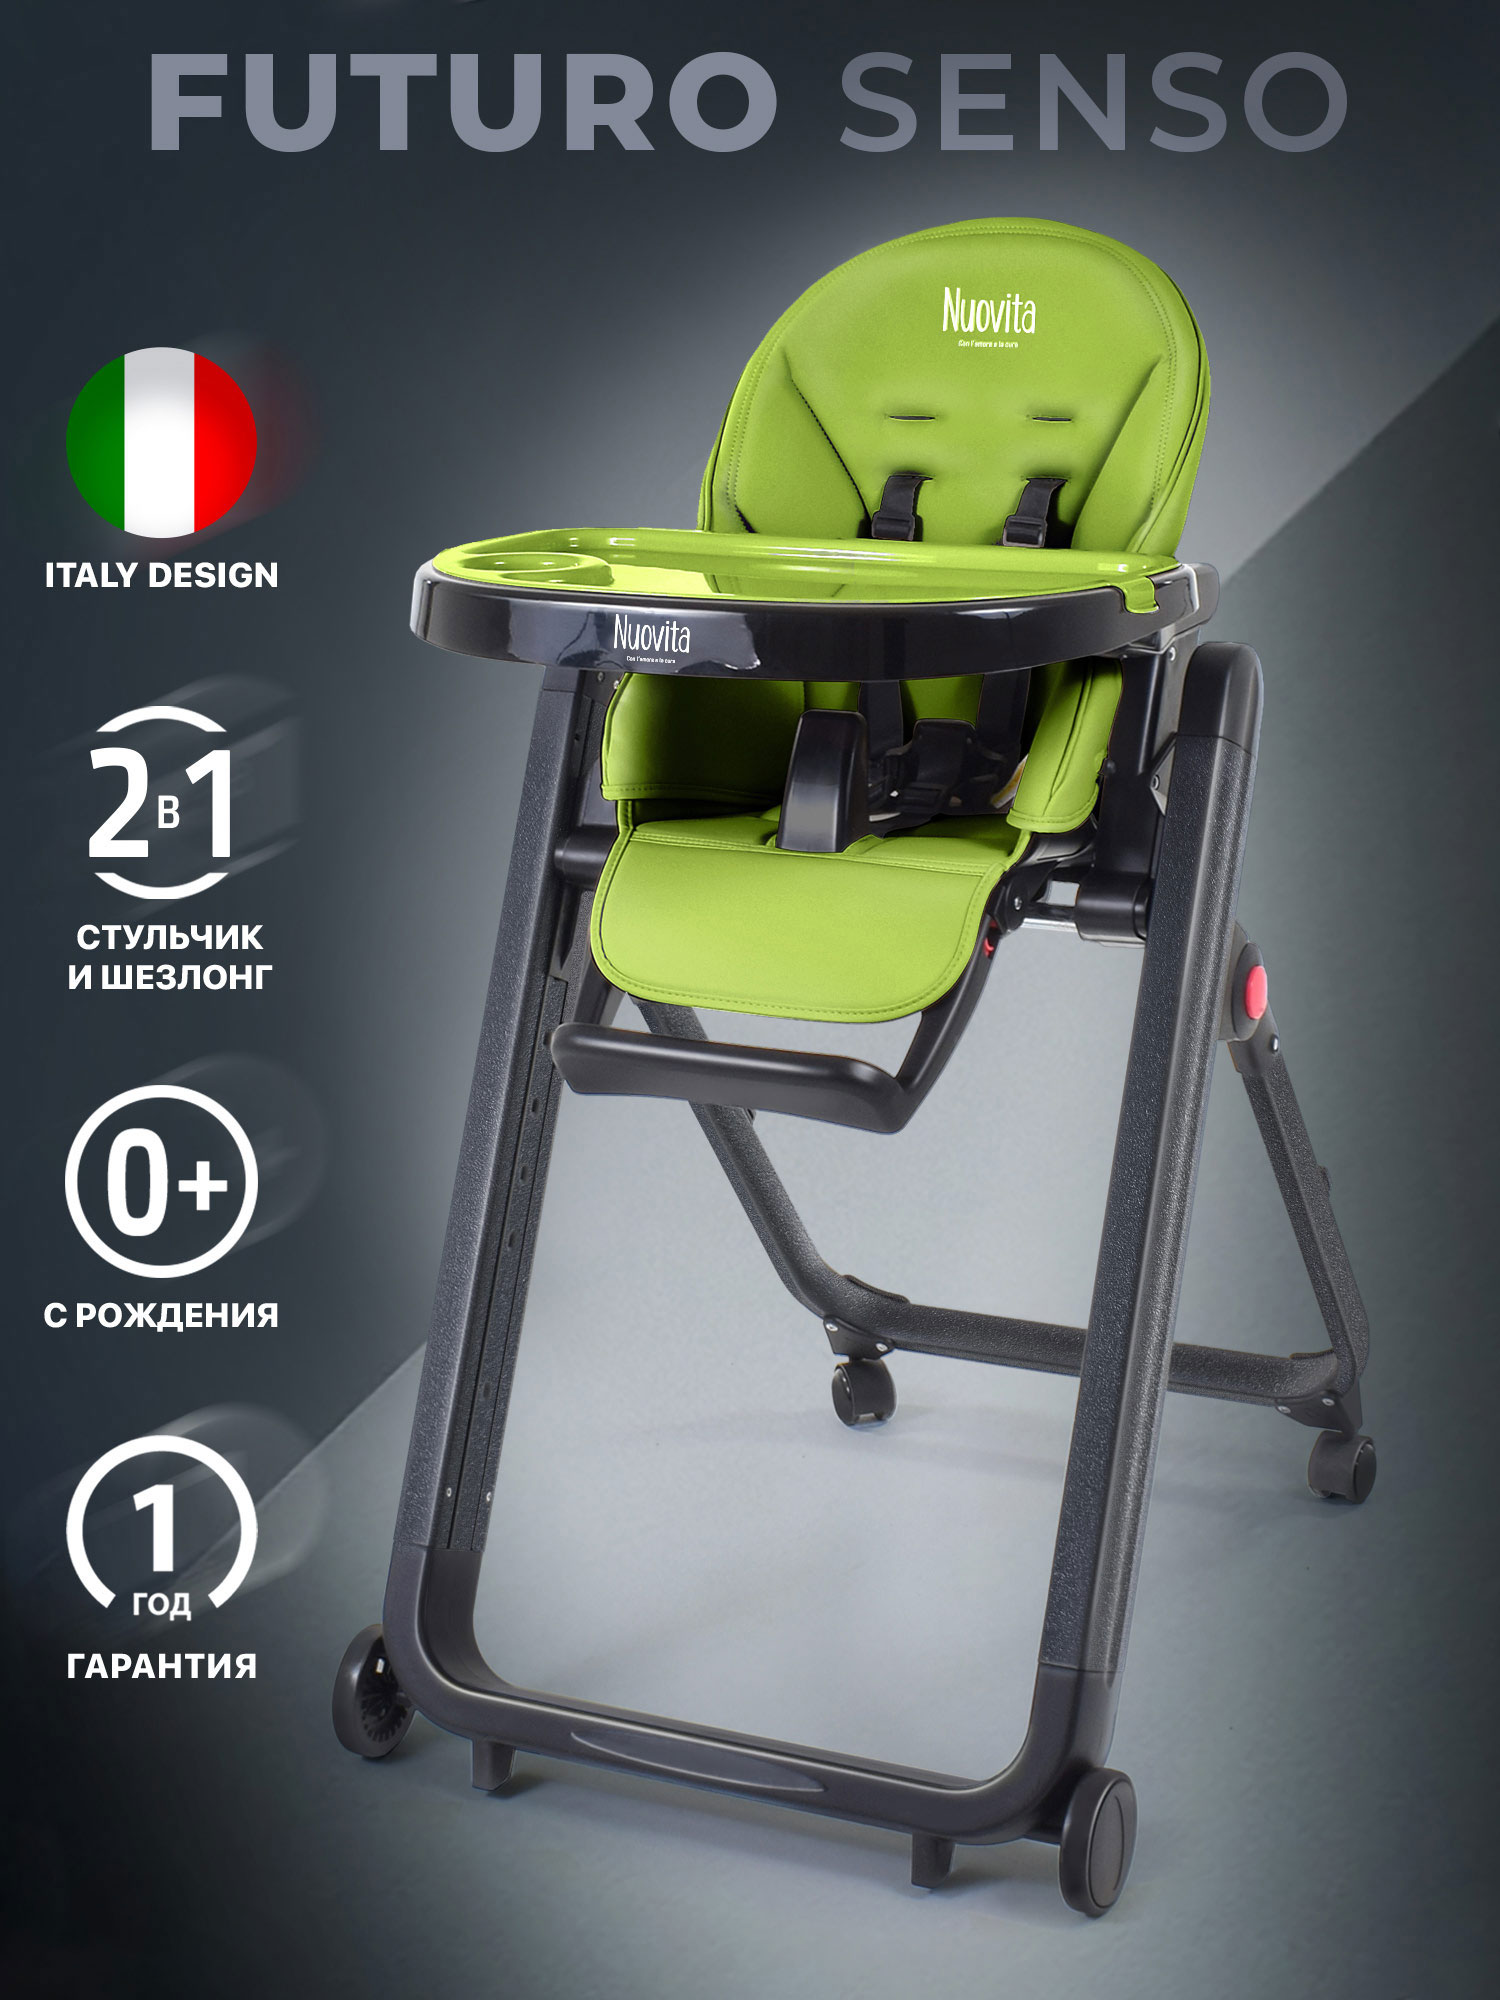 Стульчик для кормления Nuovita Futuro Senso Nero (Verde/Зеленый) стульчик для кормления nuovita futuro senso nero arancione оранжевый